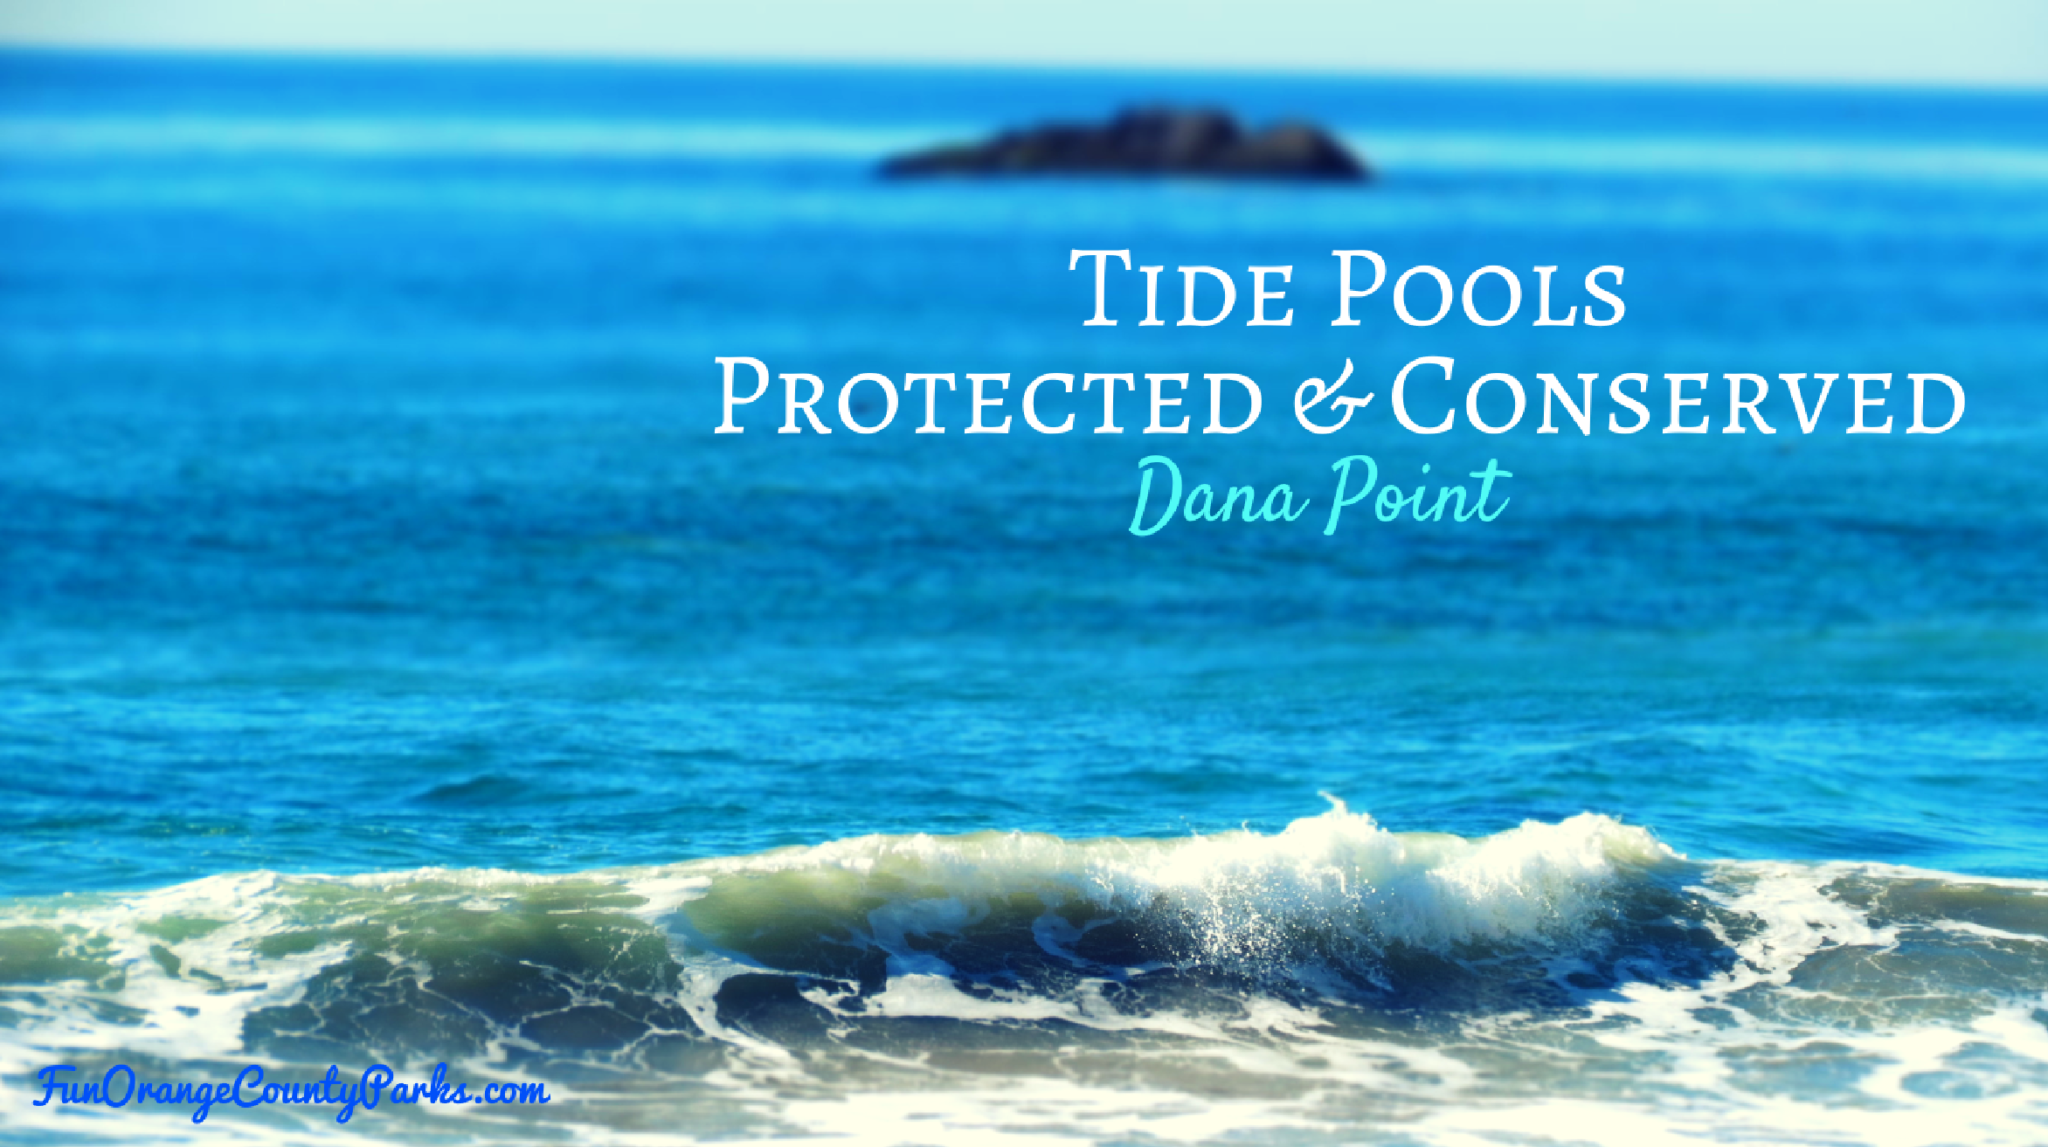 Dana Point Tide Pools Marine Protected Area (MPA) State Marine